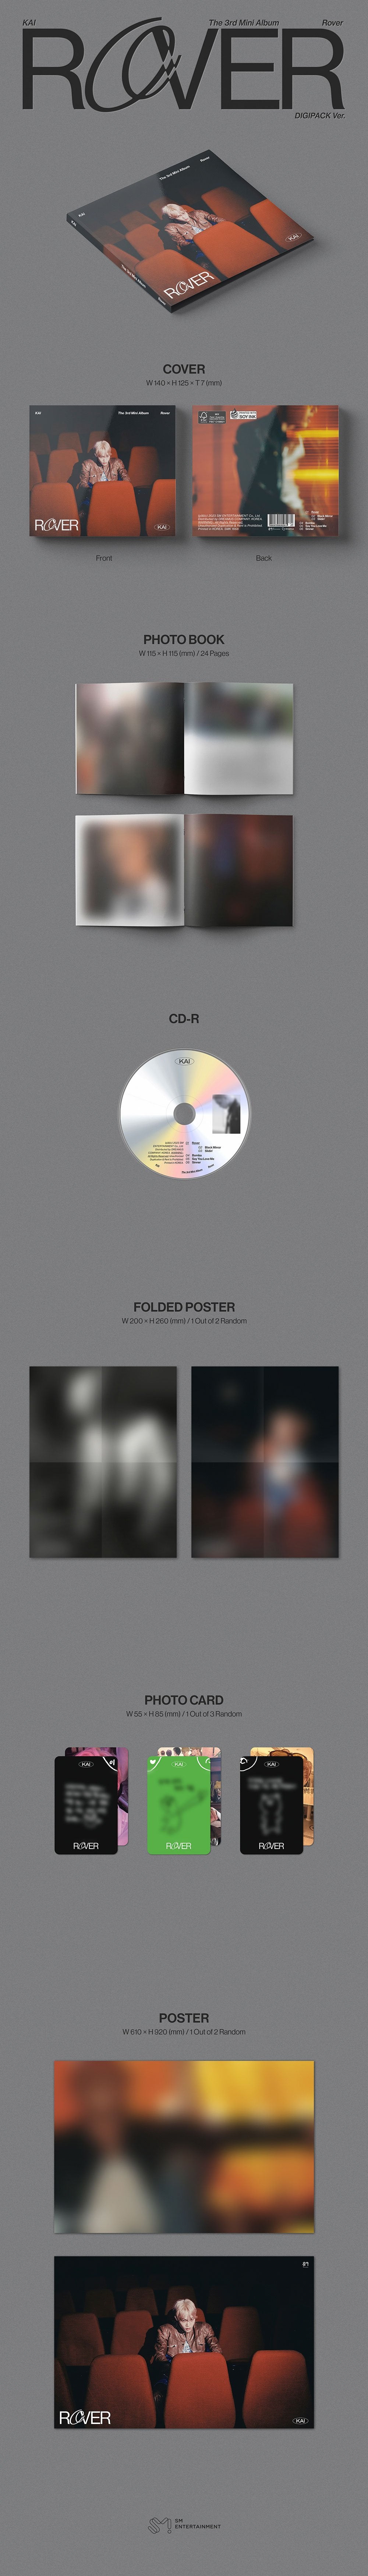 KAI (EXO) - Rover (3rd Mini Album) Digipack Ver.